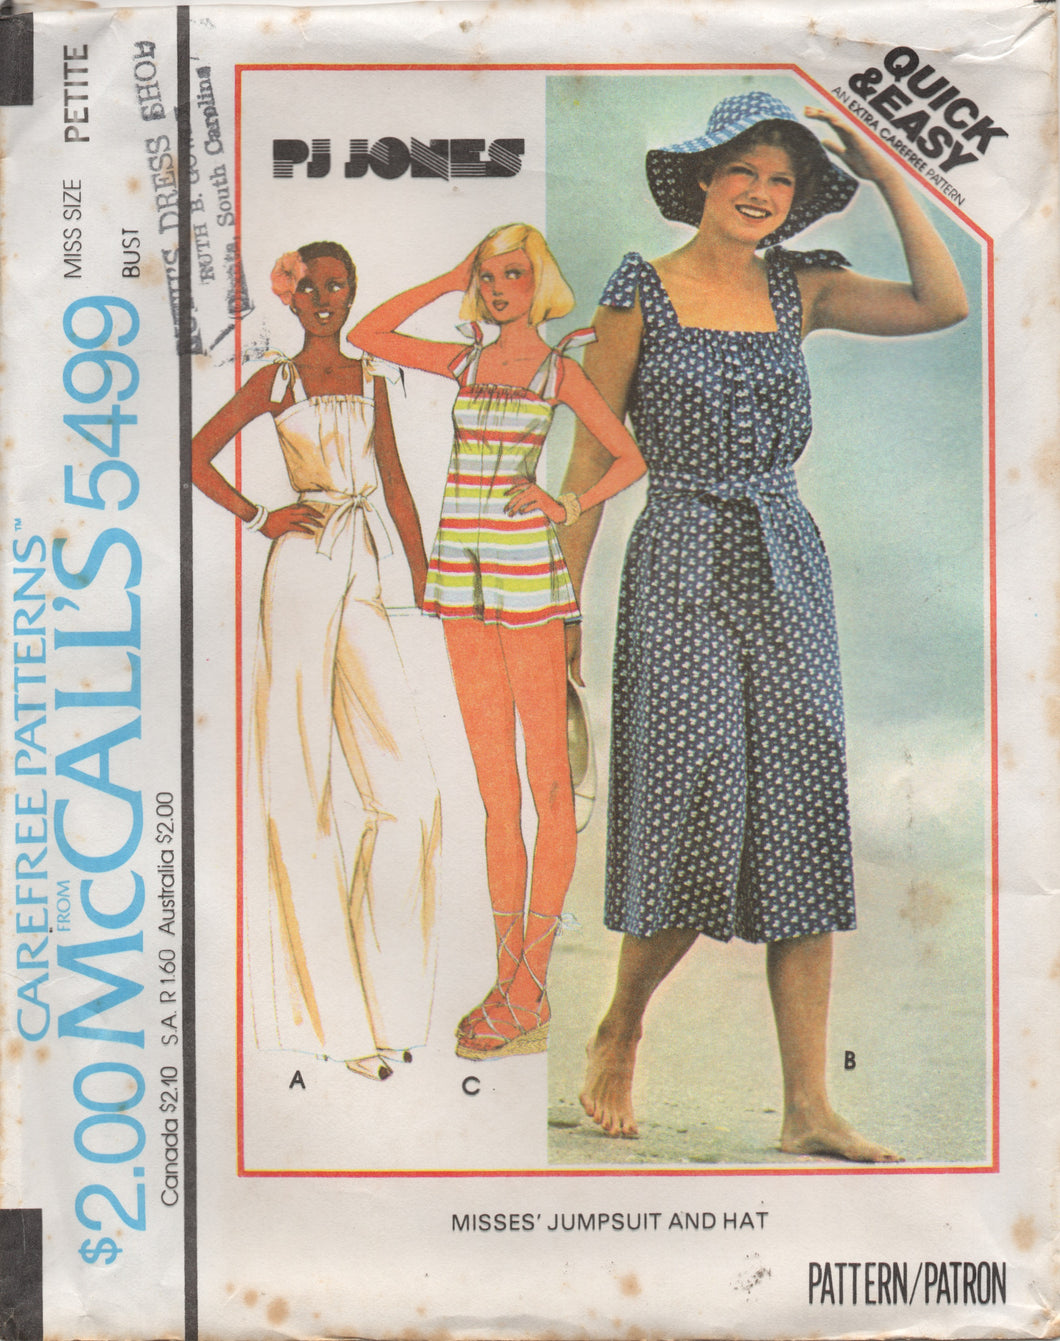 1970's McCall's Beach Romper or Jumpsuit and Sun Hat - PJ Jones - Bust 30.5-31.5